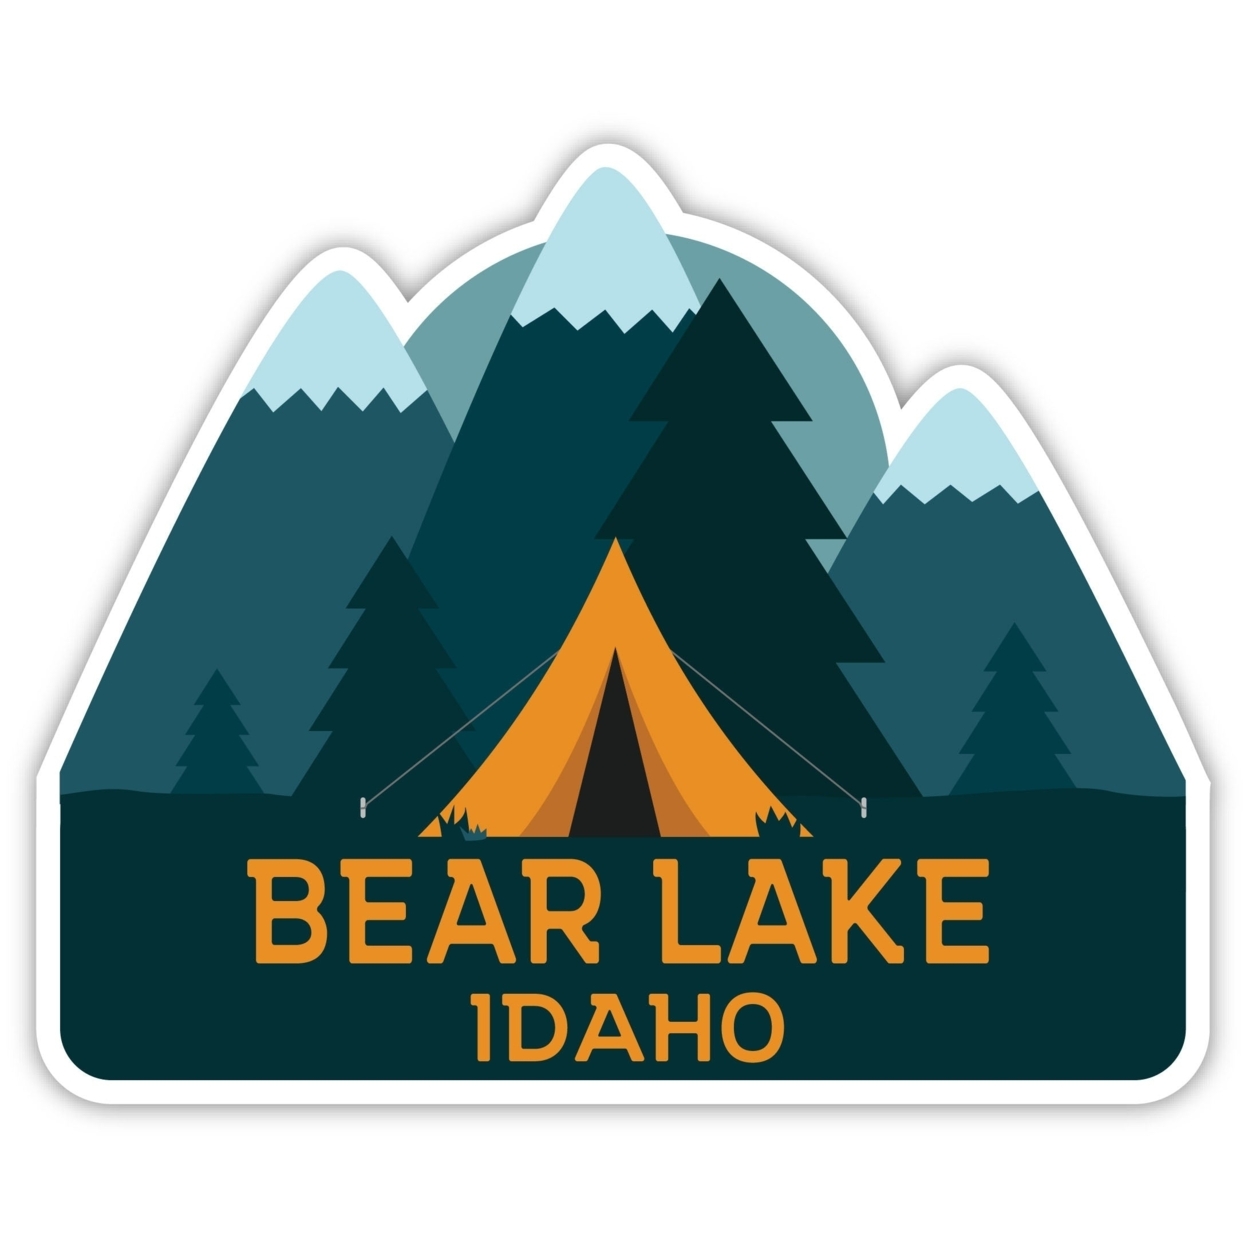 Bear Lake Idaho Souvenir Decorative Stickers (Choose Theme And Size) - Single Unit, 8-Inch, Camp Life